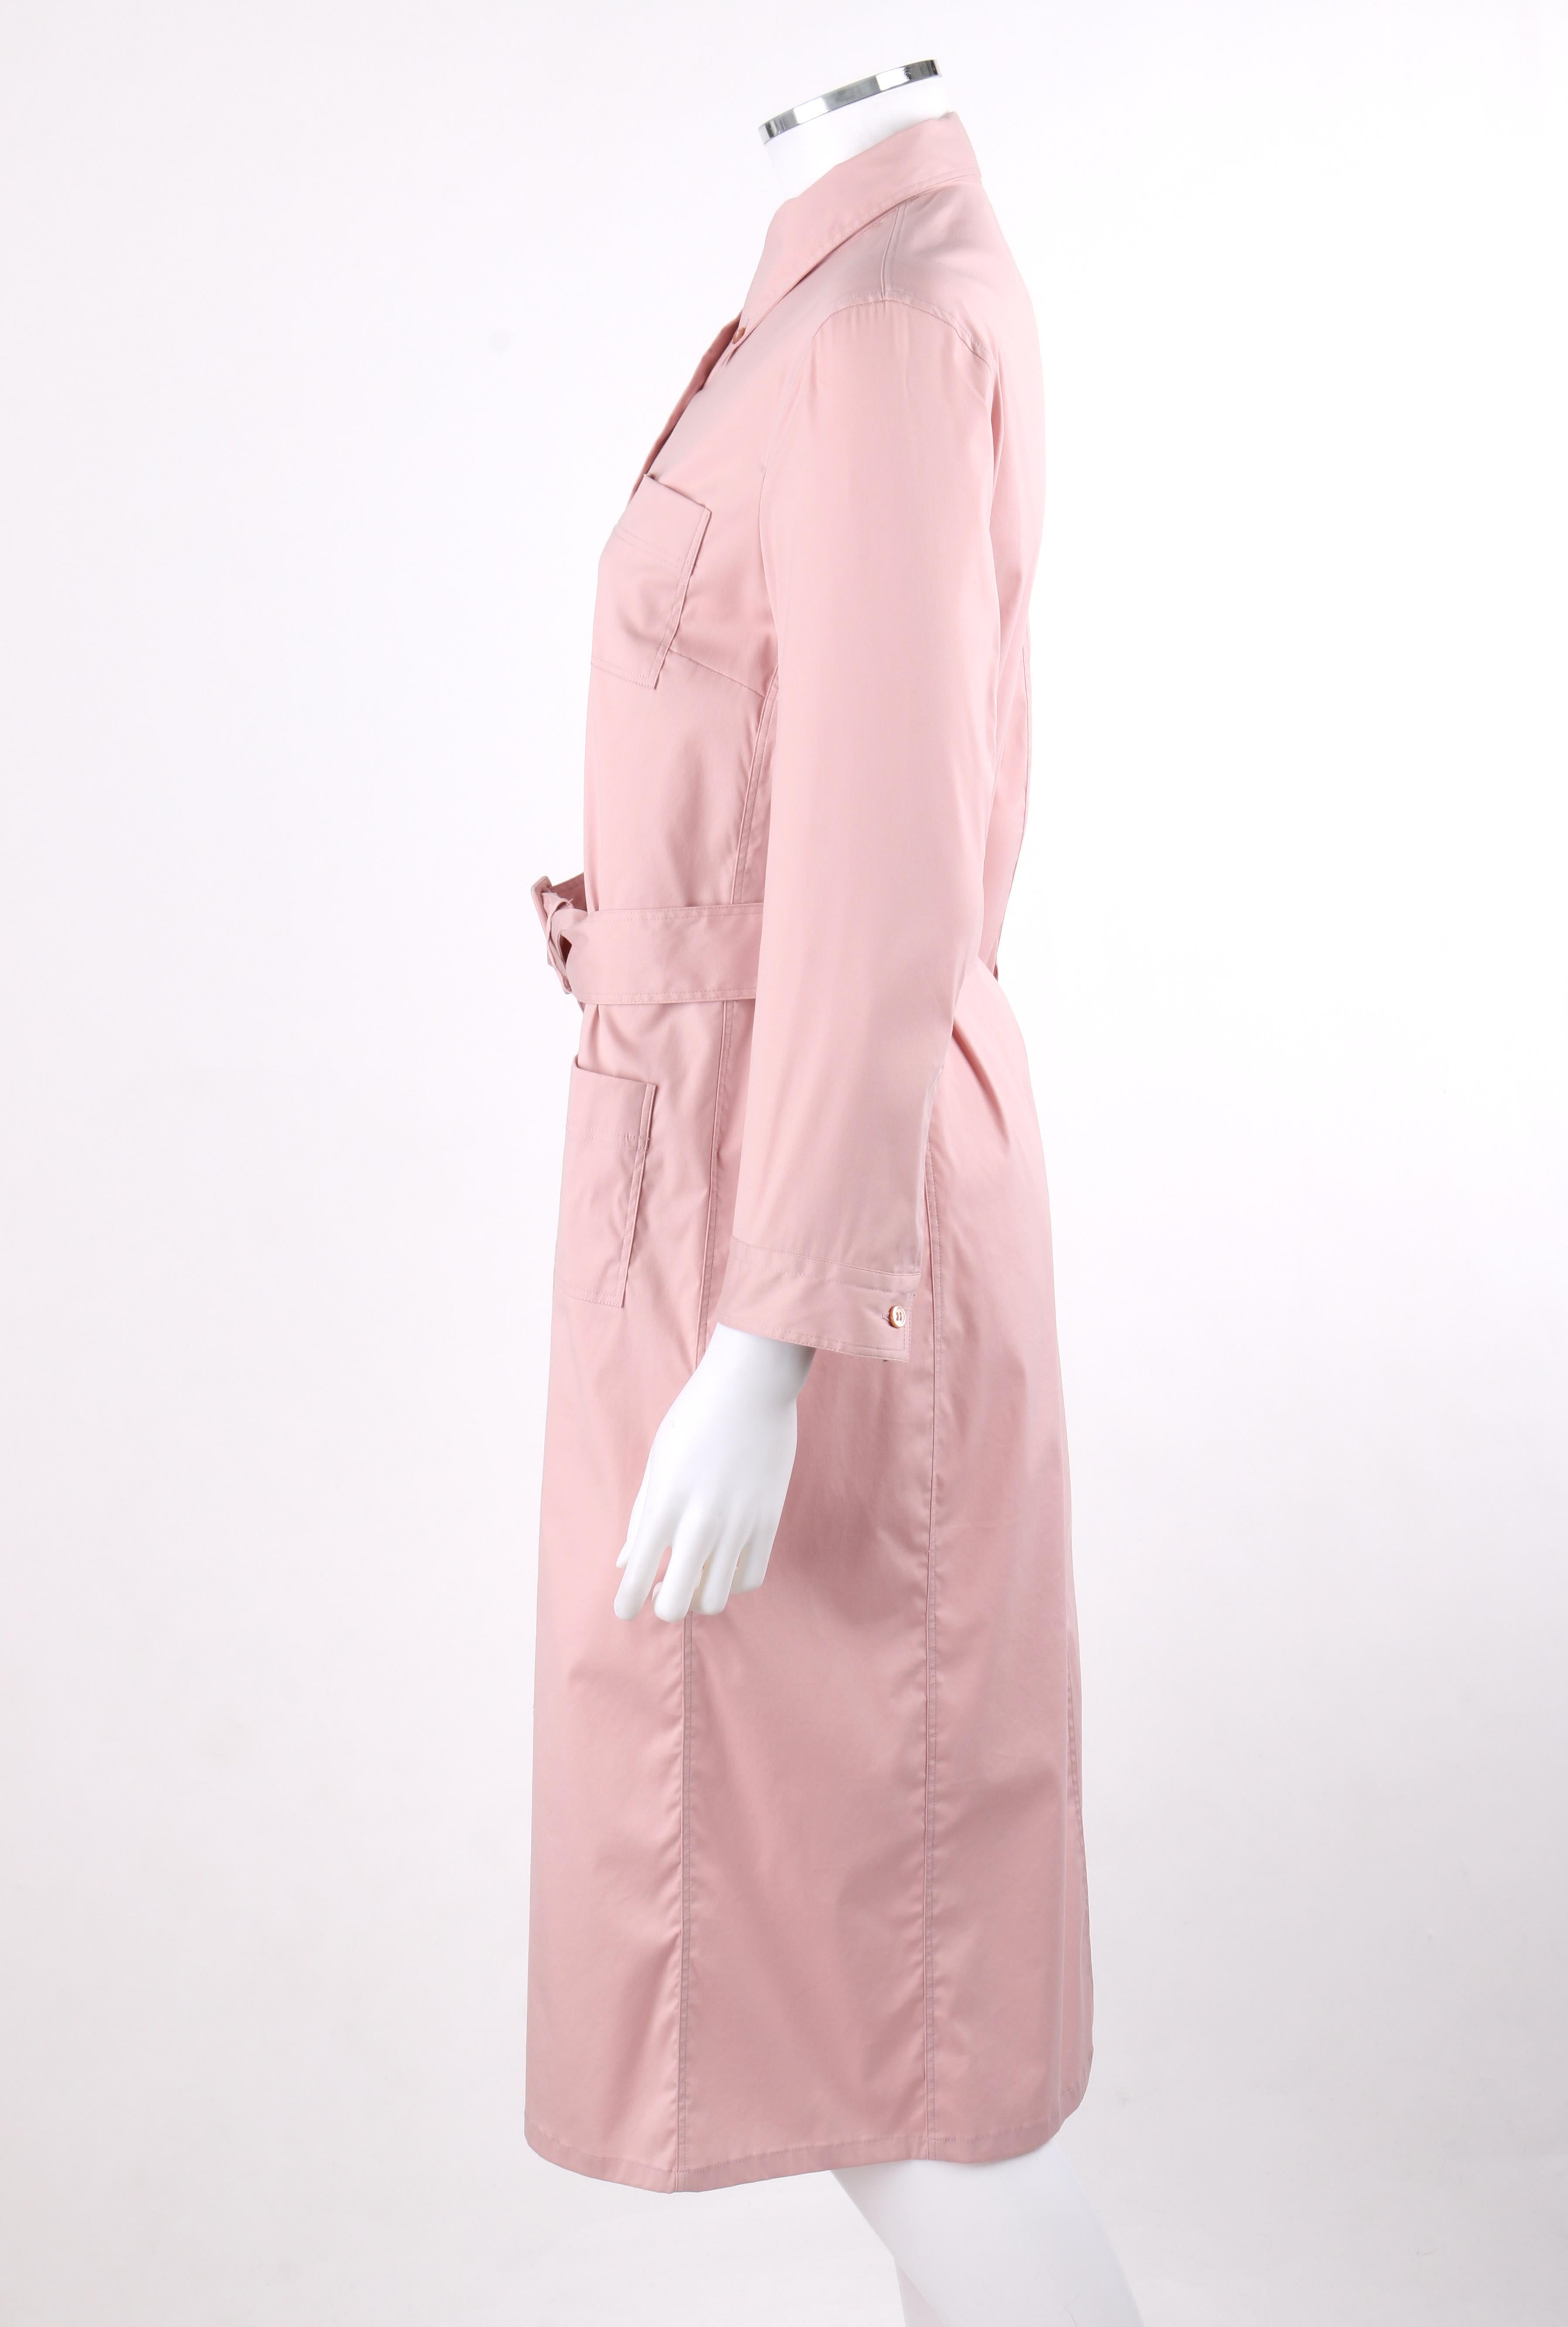 PRADA c.2000’s Pink Button Down Patch Pocket Belted Long Sleeve Shirt Dress 2